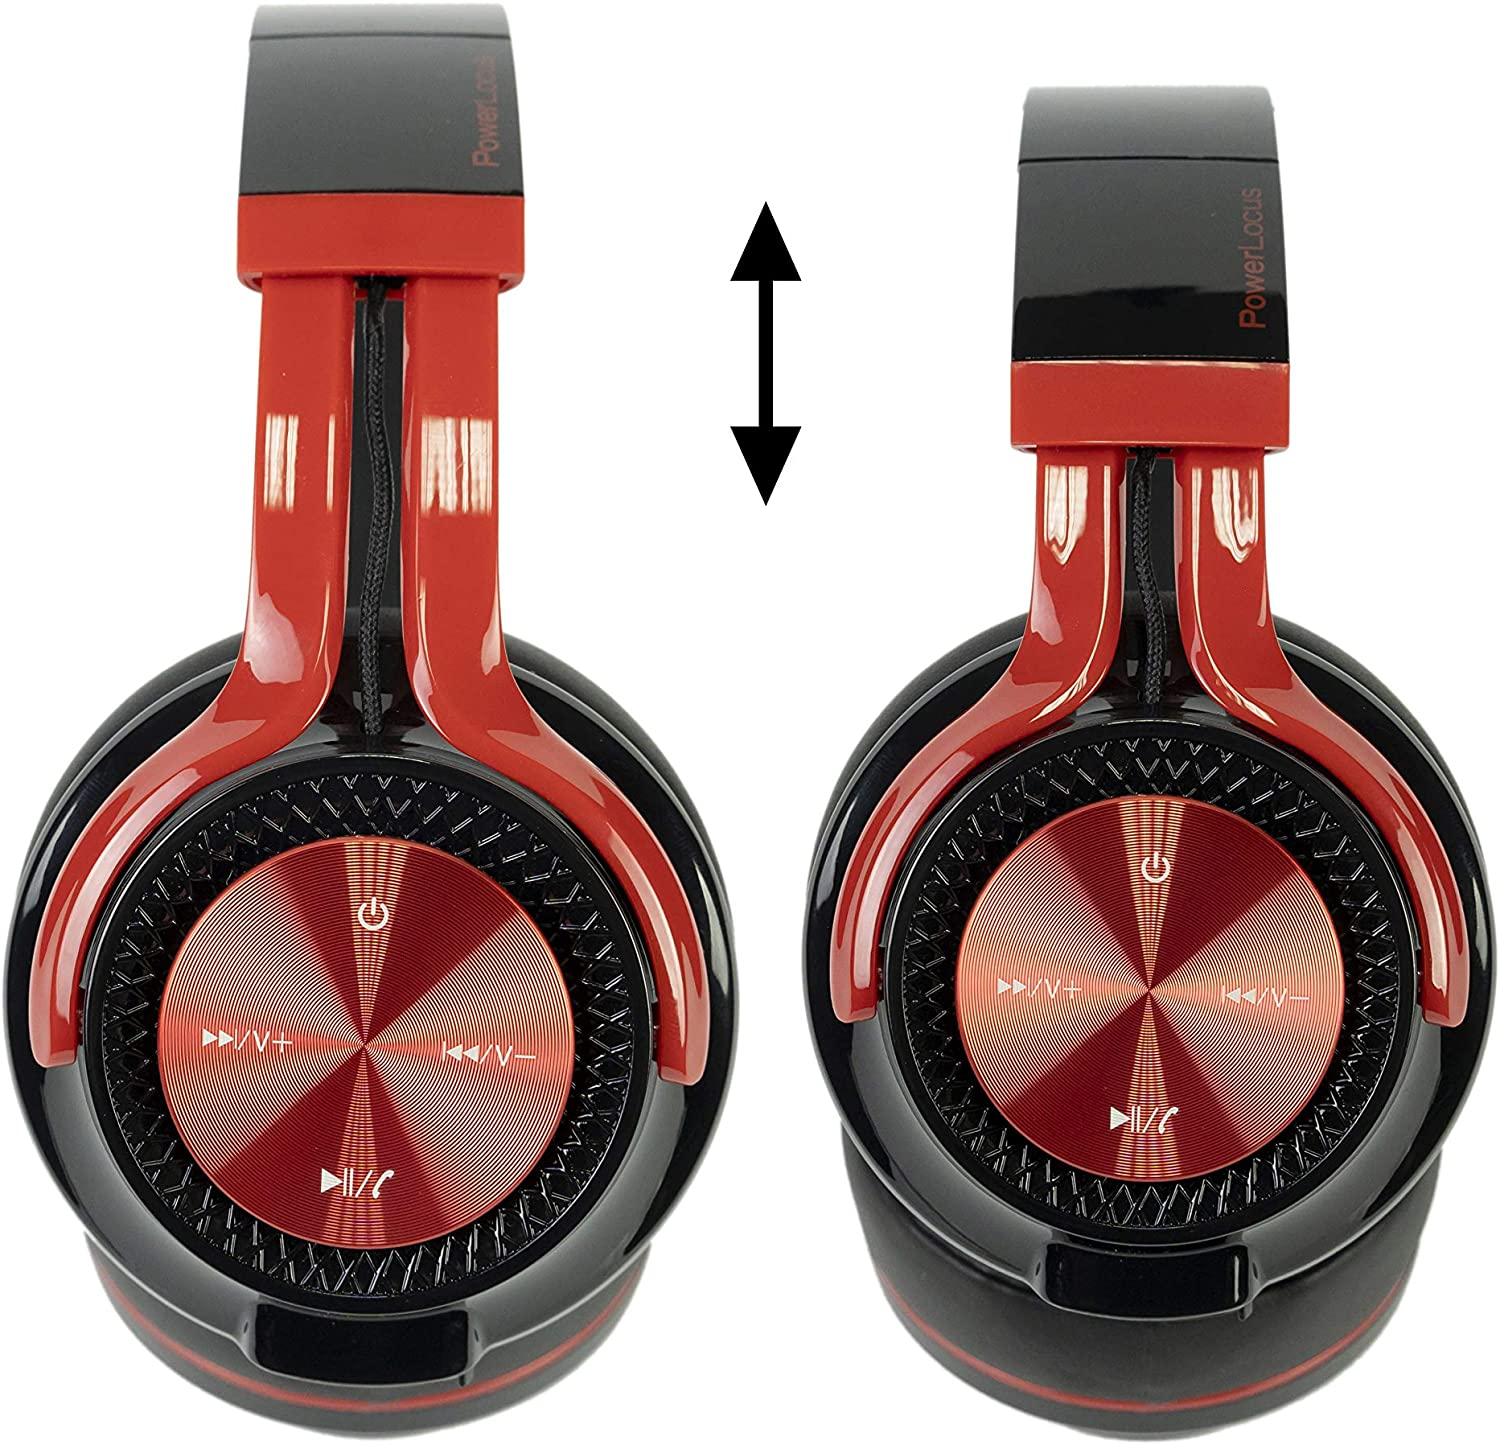 POWERLOCUS P3, Over-ear Kopfhörer Bluetooth Rot